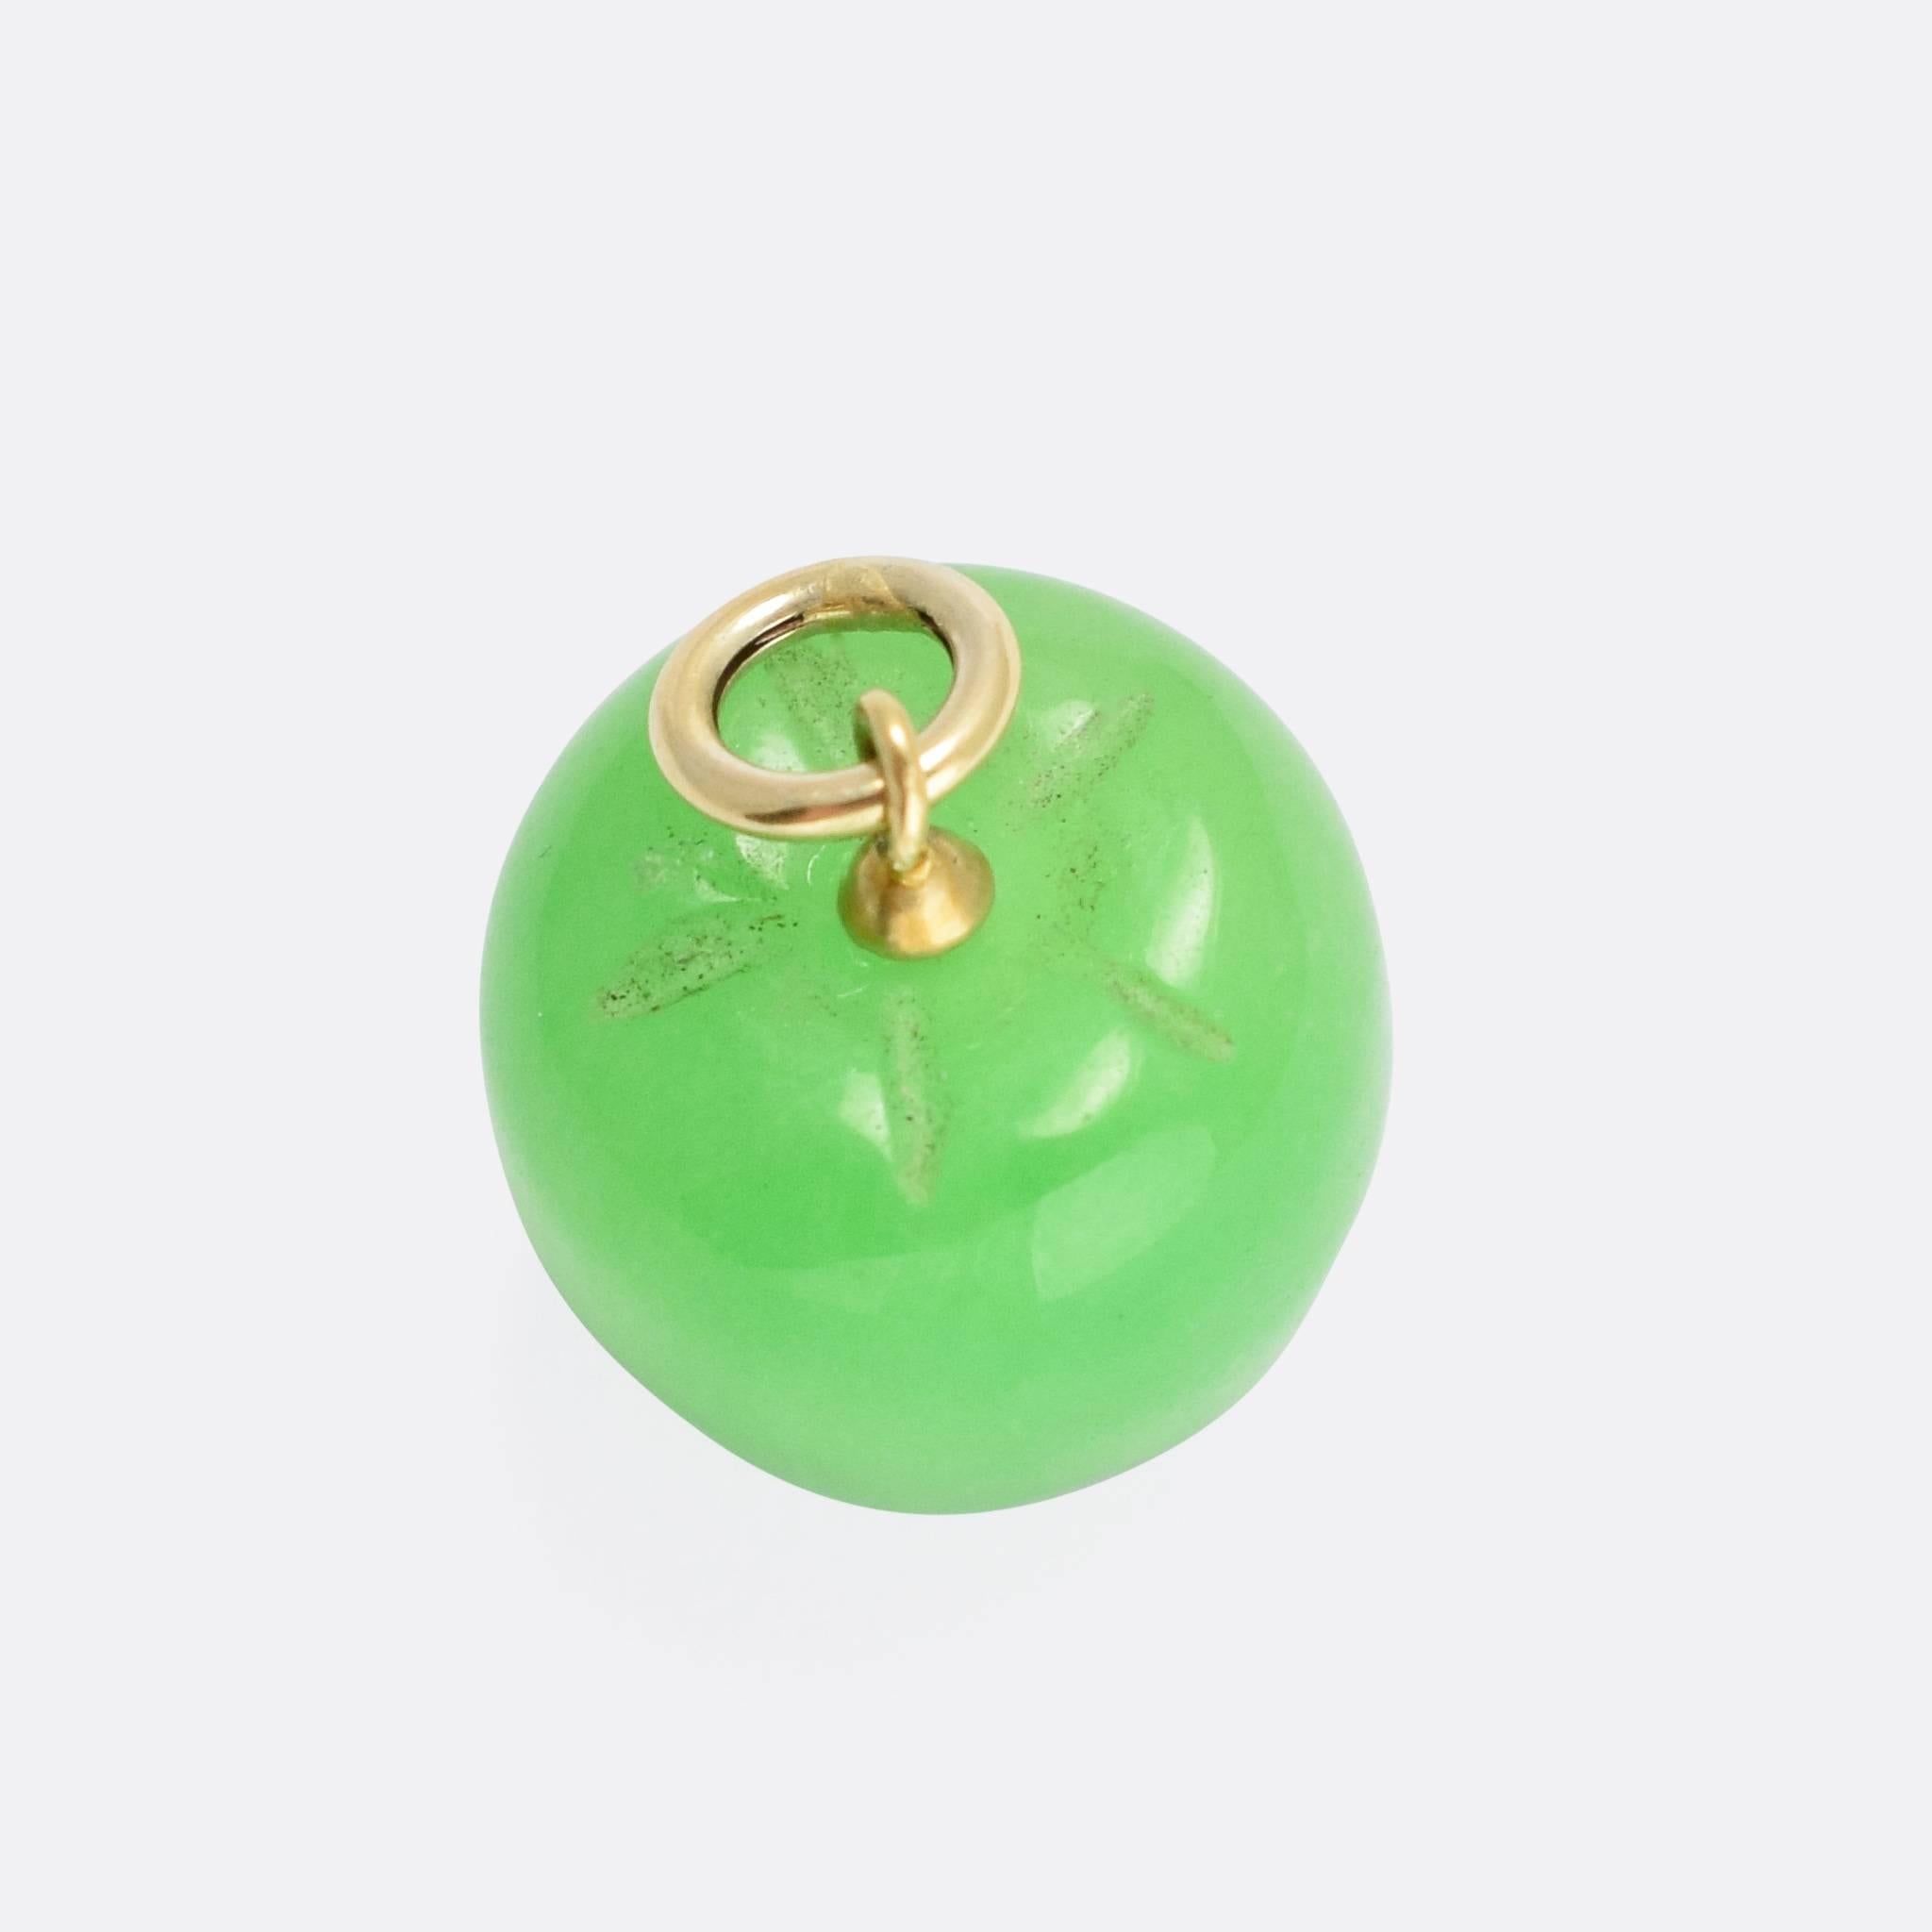 green apple jewelry